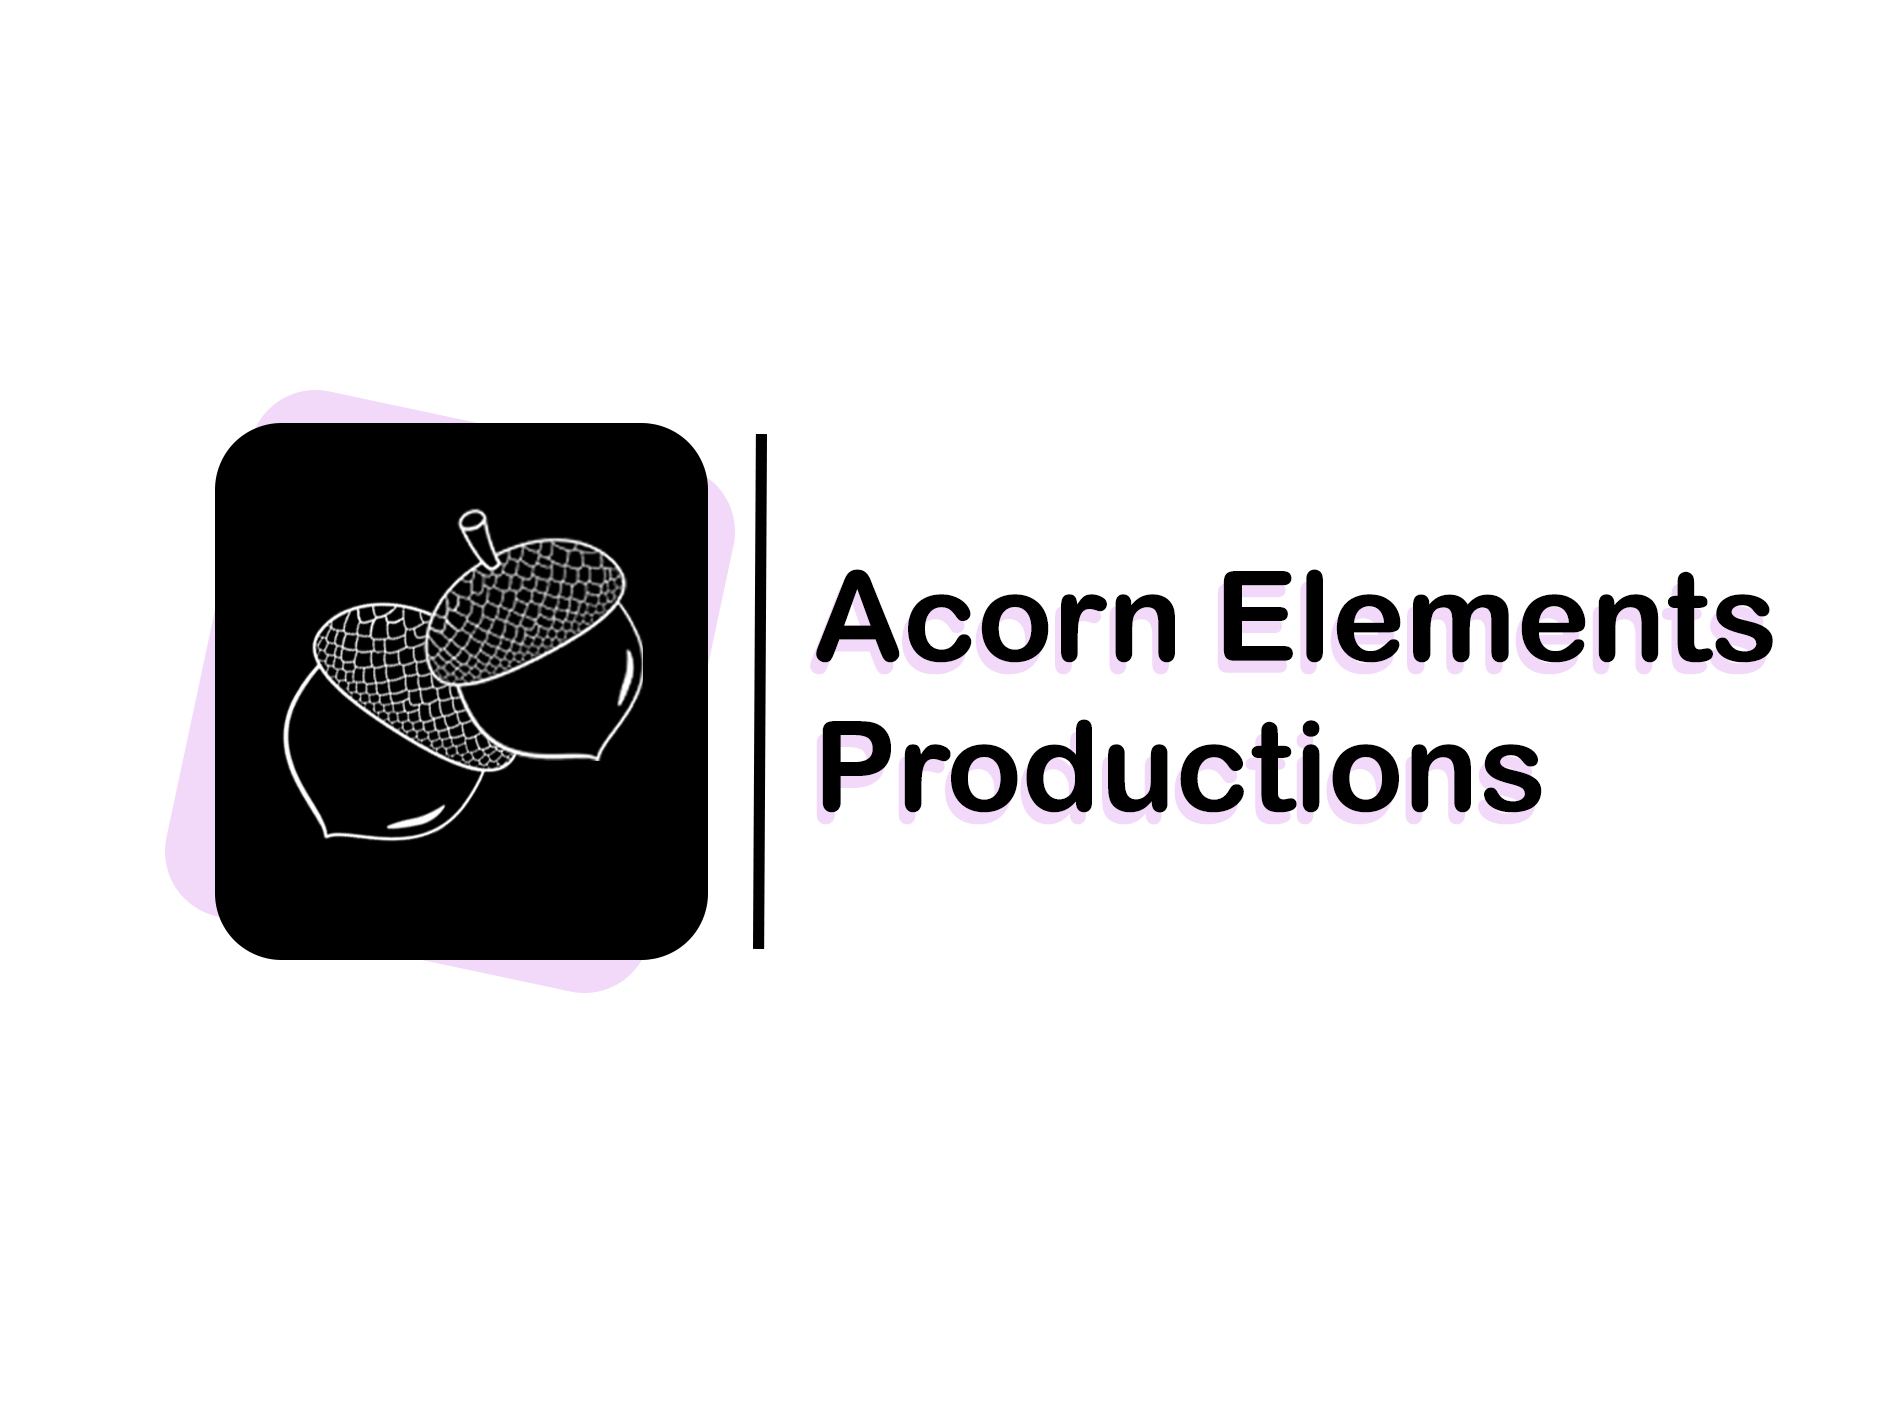 Acorn Elements Productions - Media production